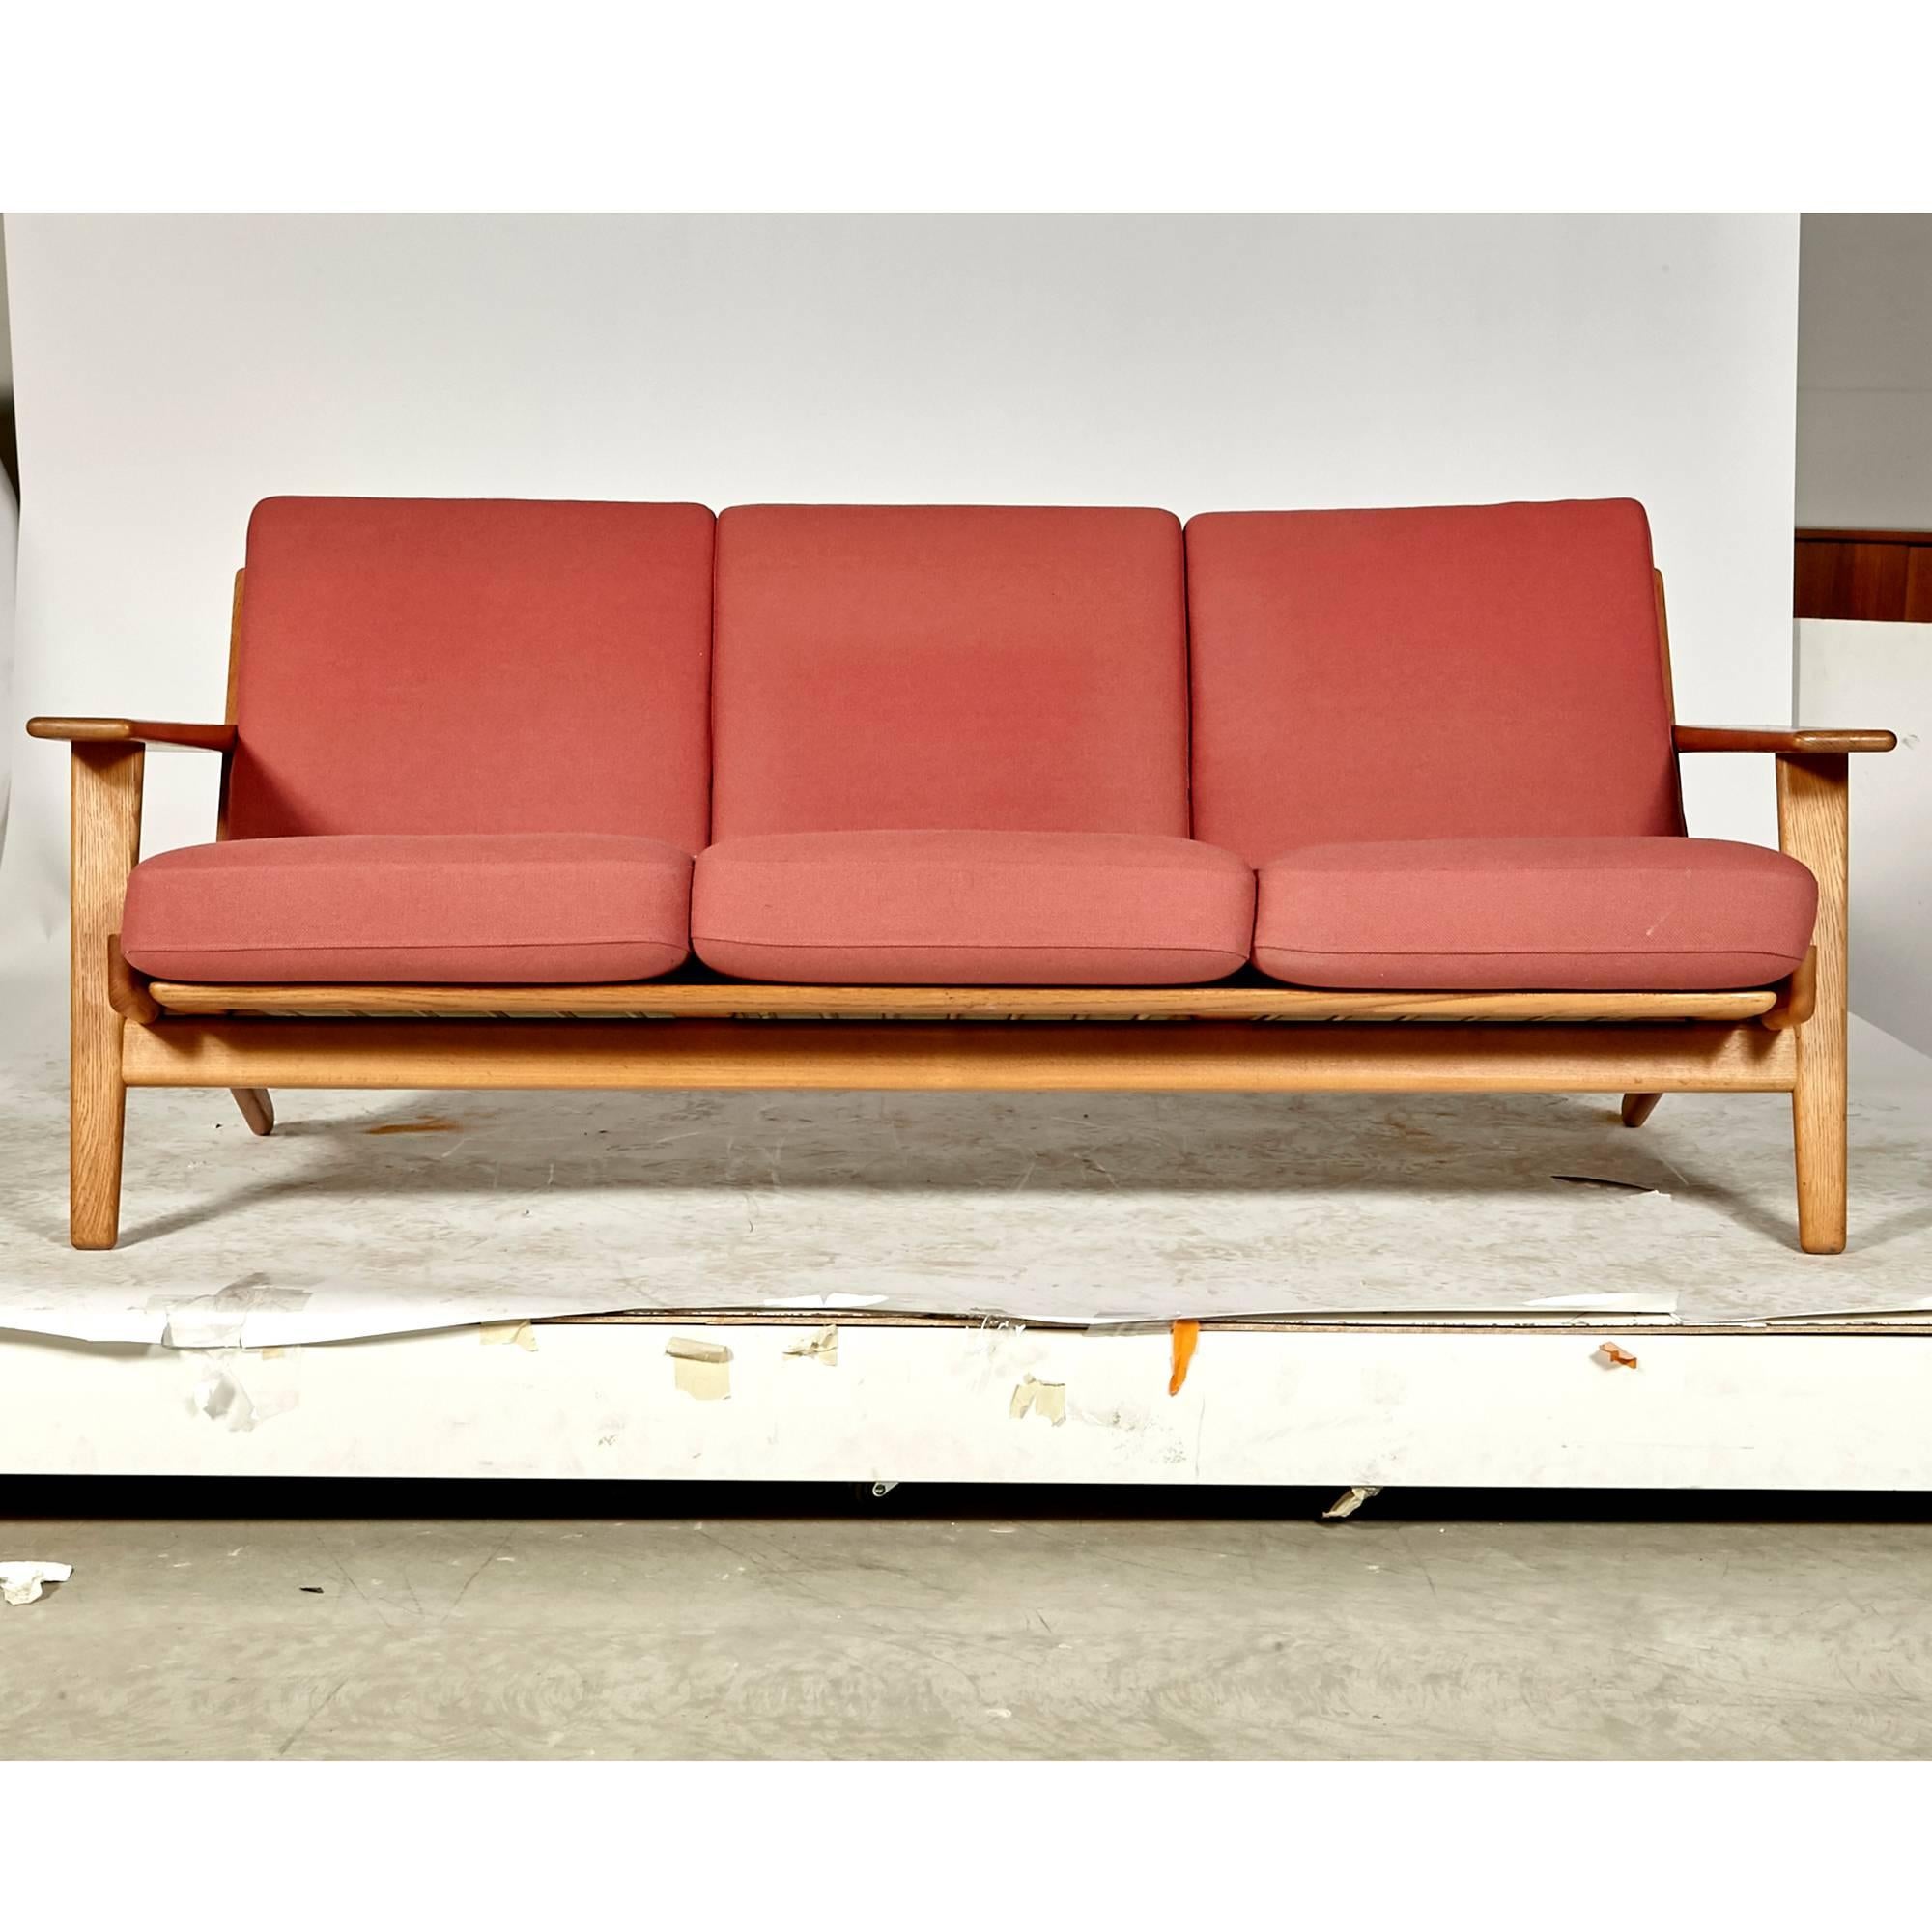 Vintage 1960s Hans J. Wegner three seat sofa designed for GETAMA of Denmark in oak Model GE-290. Sofa has paddle arms and original light red fabric. Arm height: 20.5